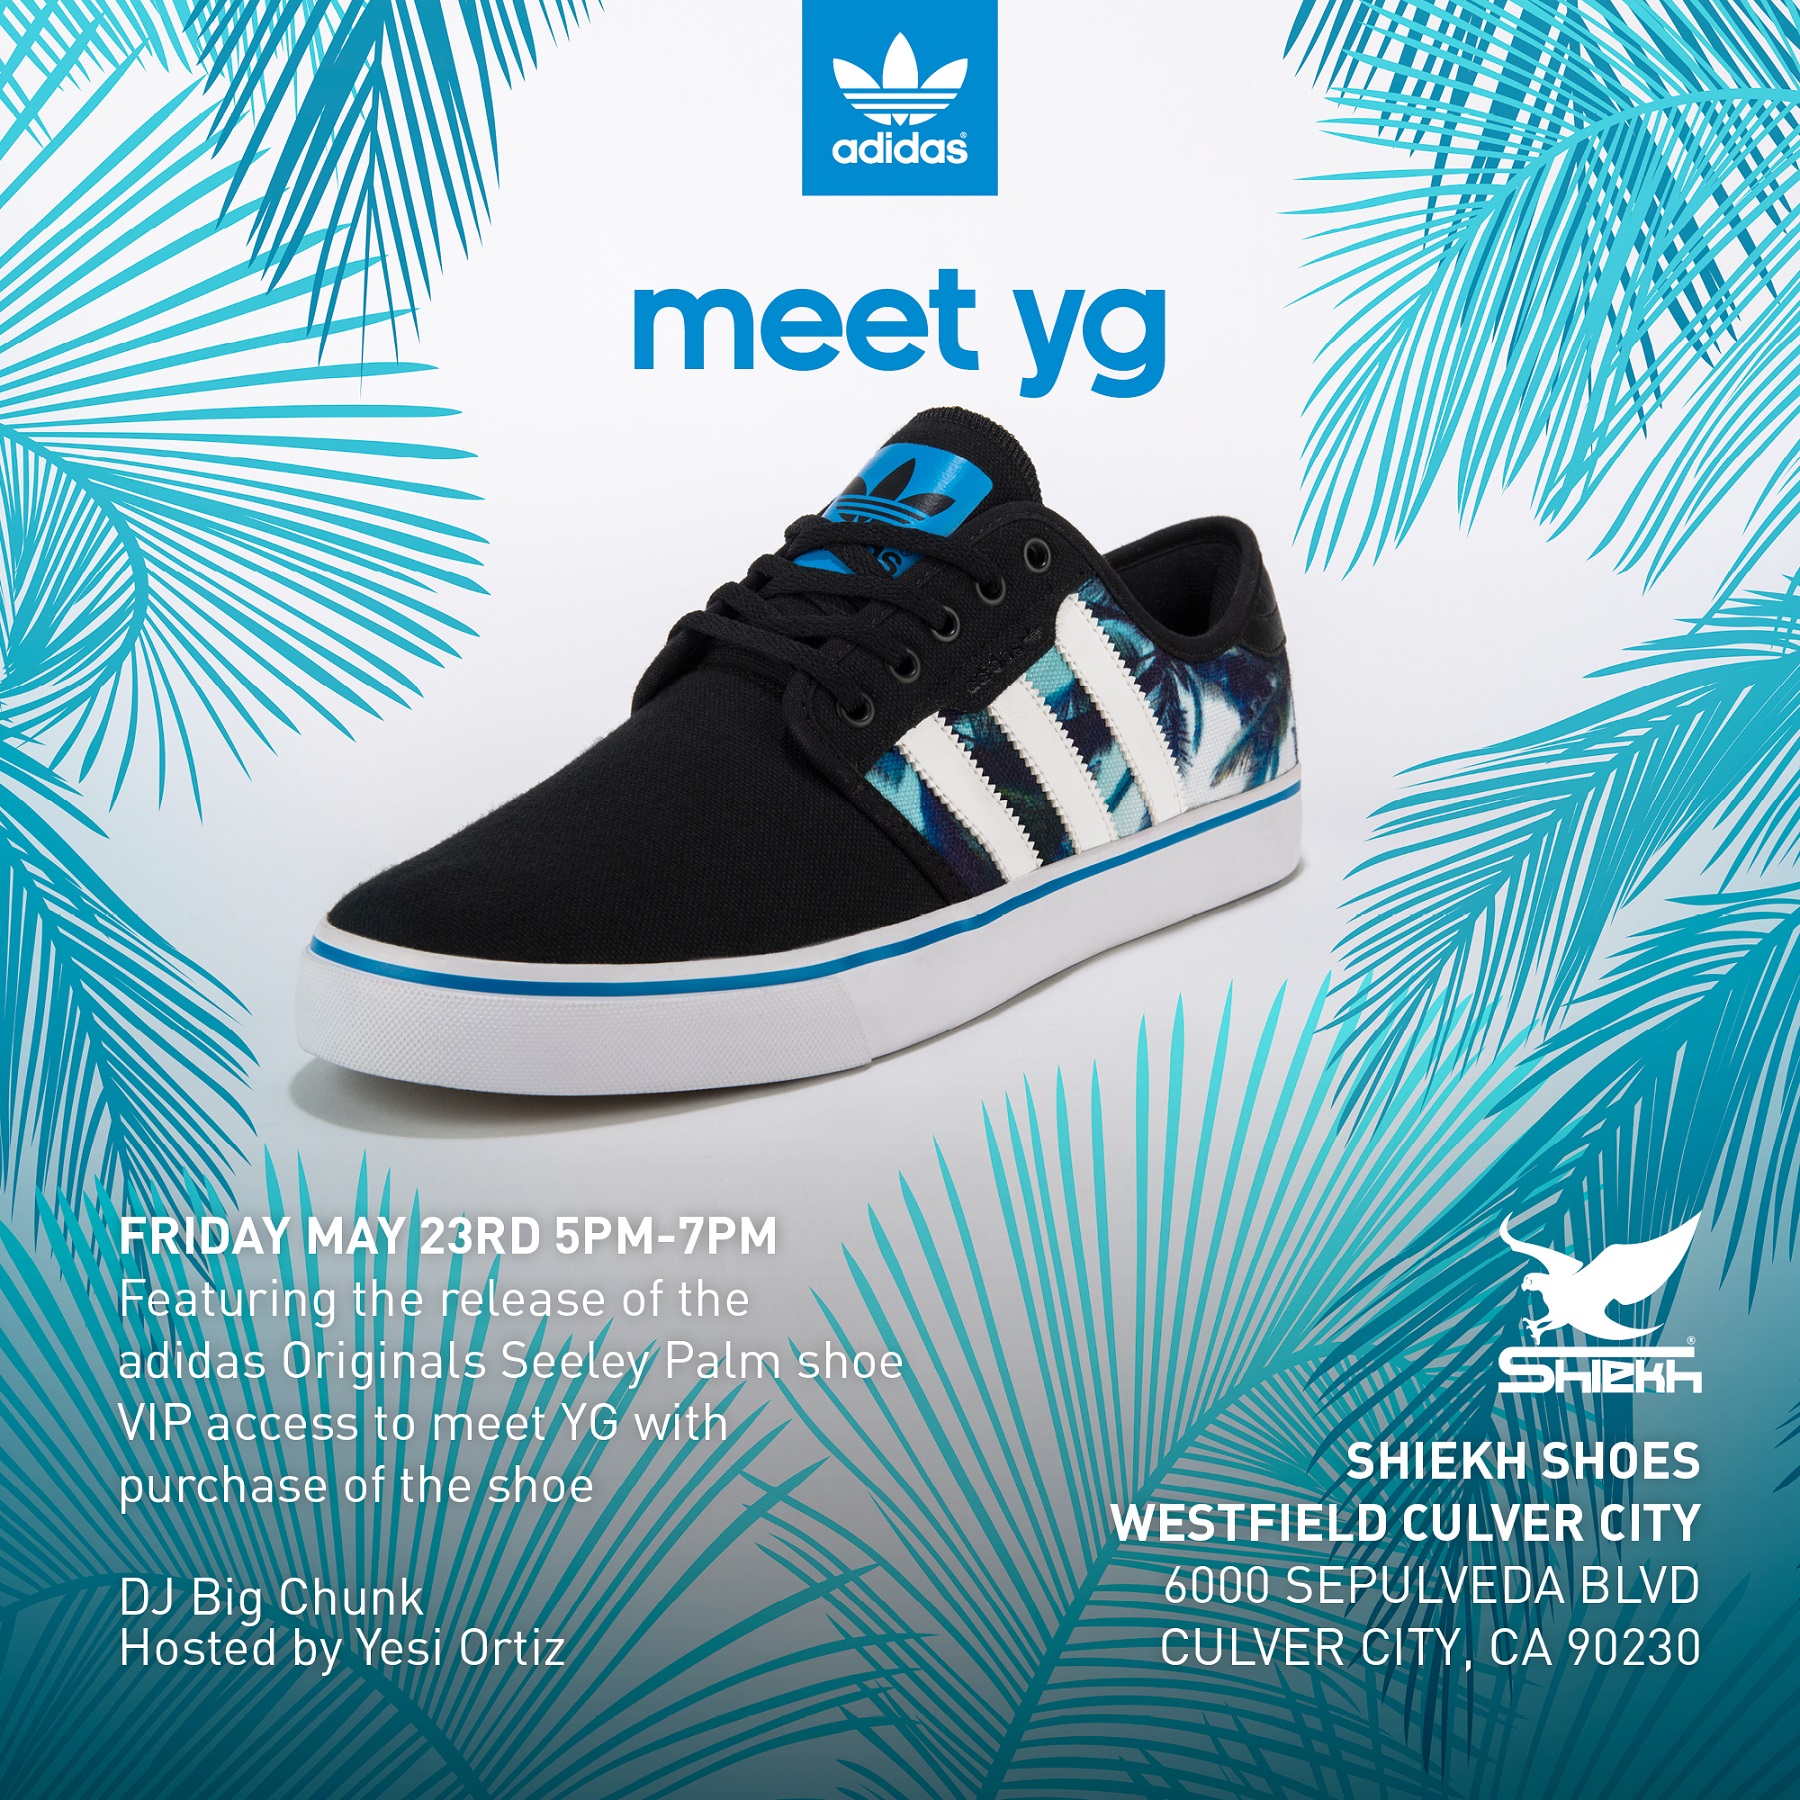 Zwakheid Loodgieter Irrigatie adidas and Shiekh Shoe Exclusive Seeley Palm Sneaker Event Featuring Rapper  YG - WearTesters